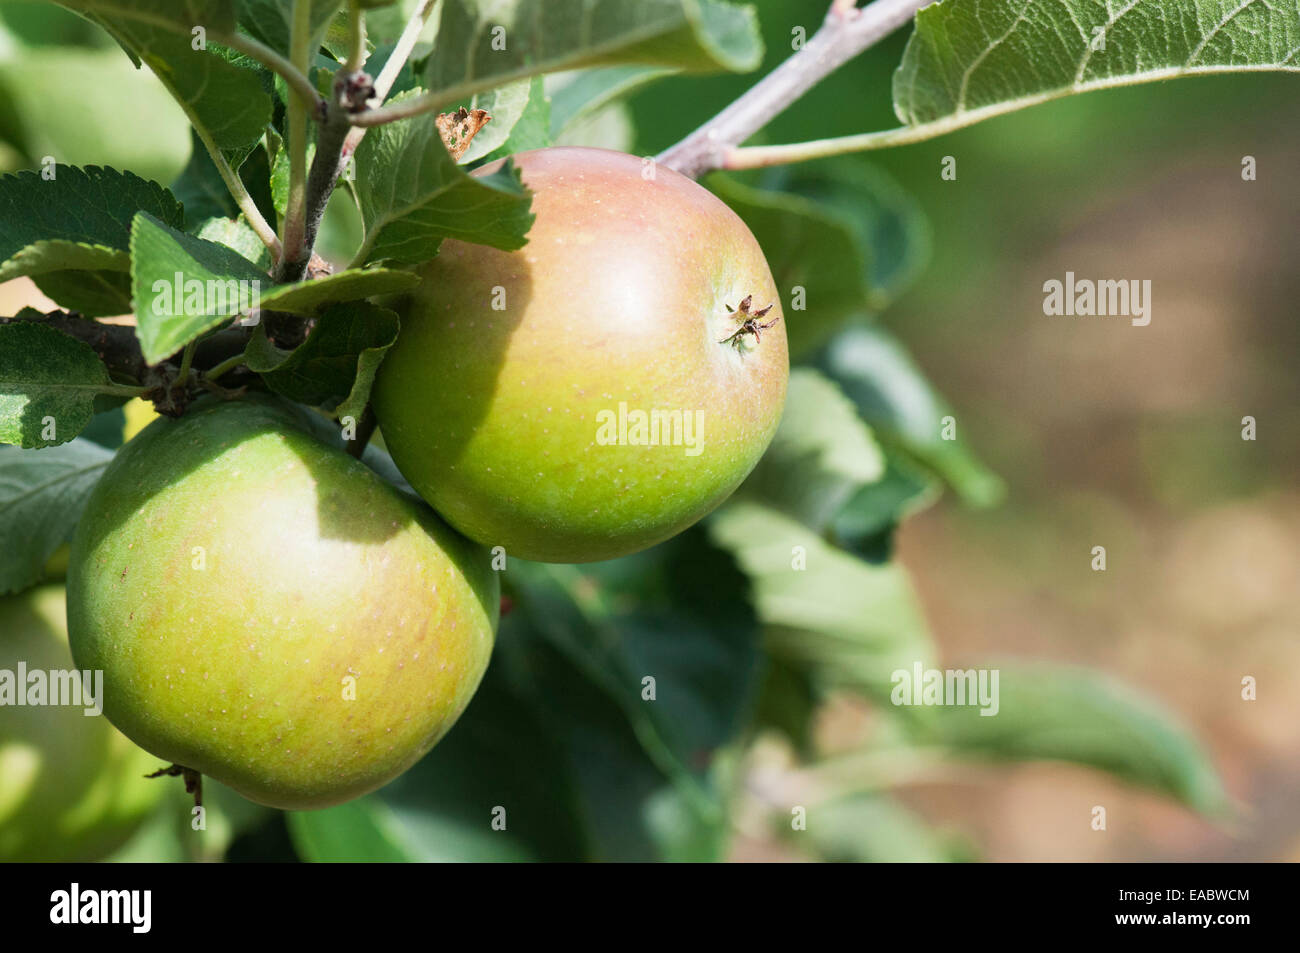 Apple, Malus domestica 'Lord Lambourne', l'objet rouge, fond vert. Banque D'Images